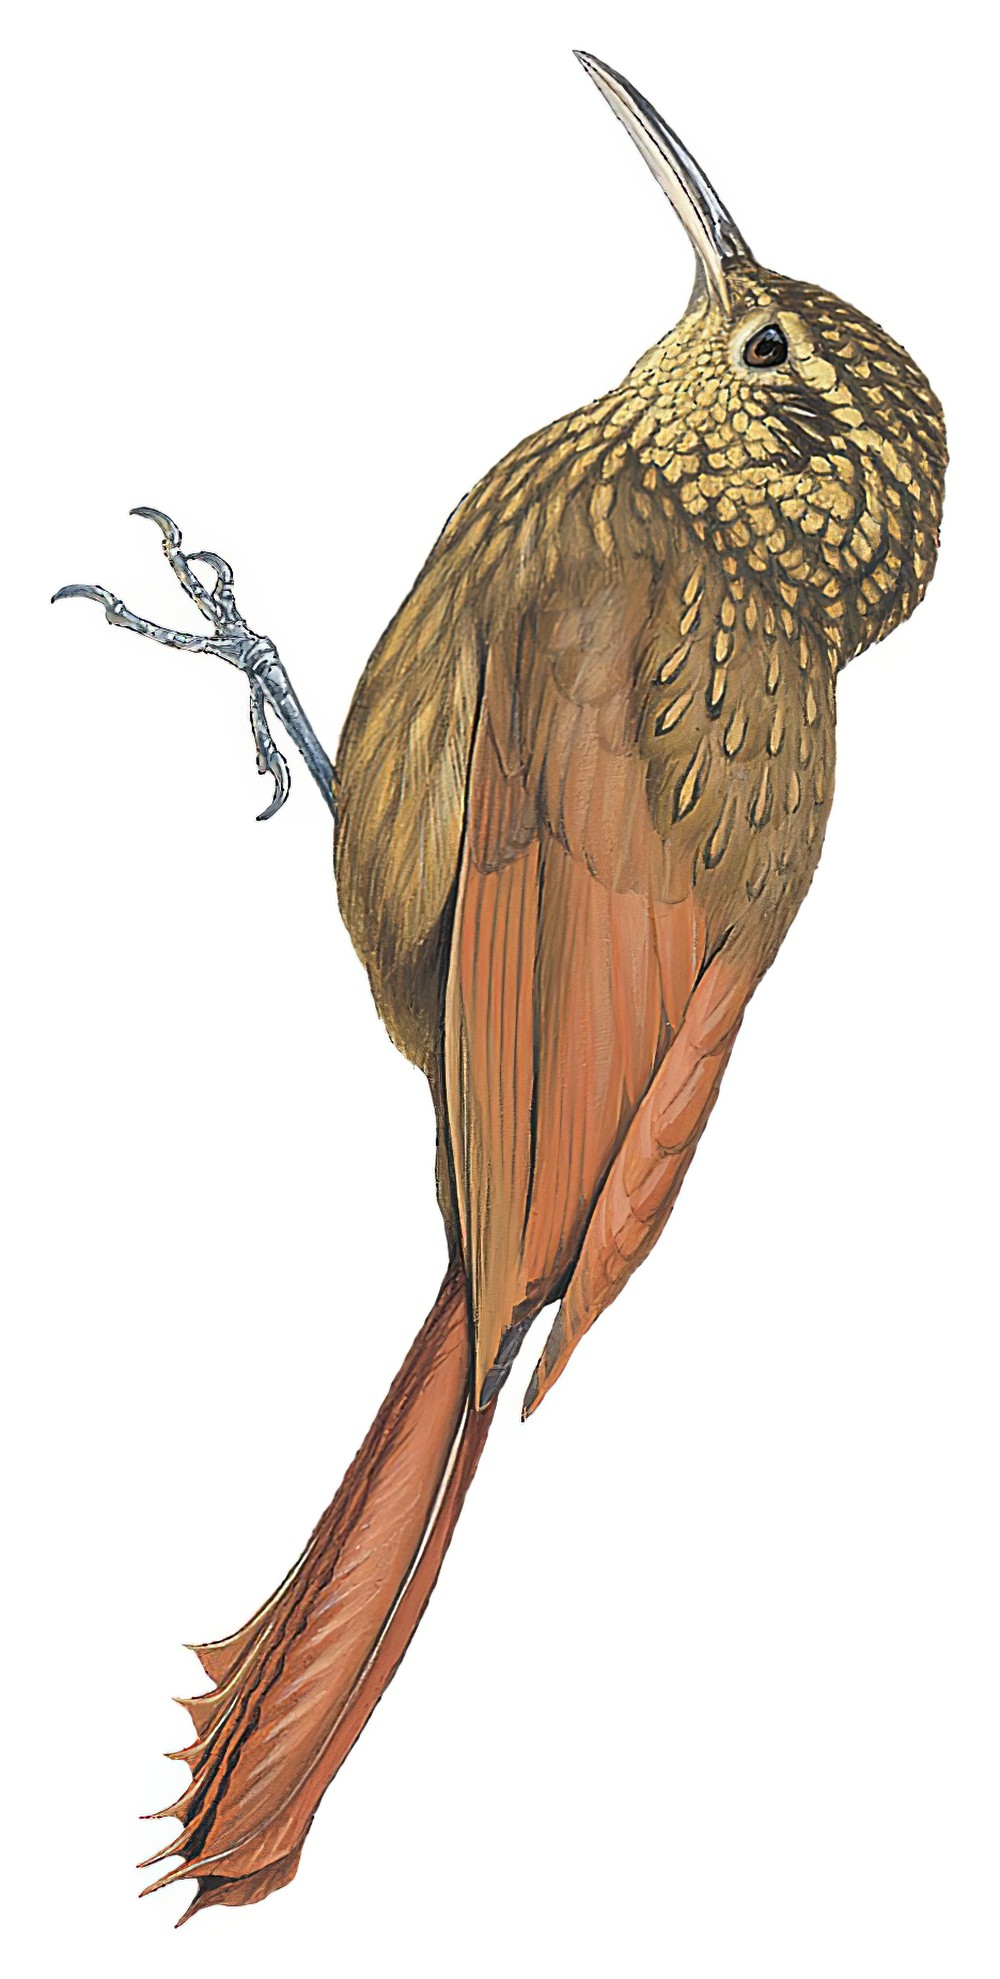 大西洋䴕雀 / Ceara Woodcreeper / Xiphorhynchus atlanticus